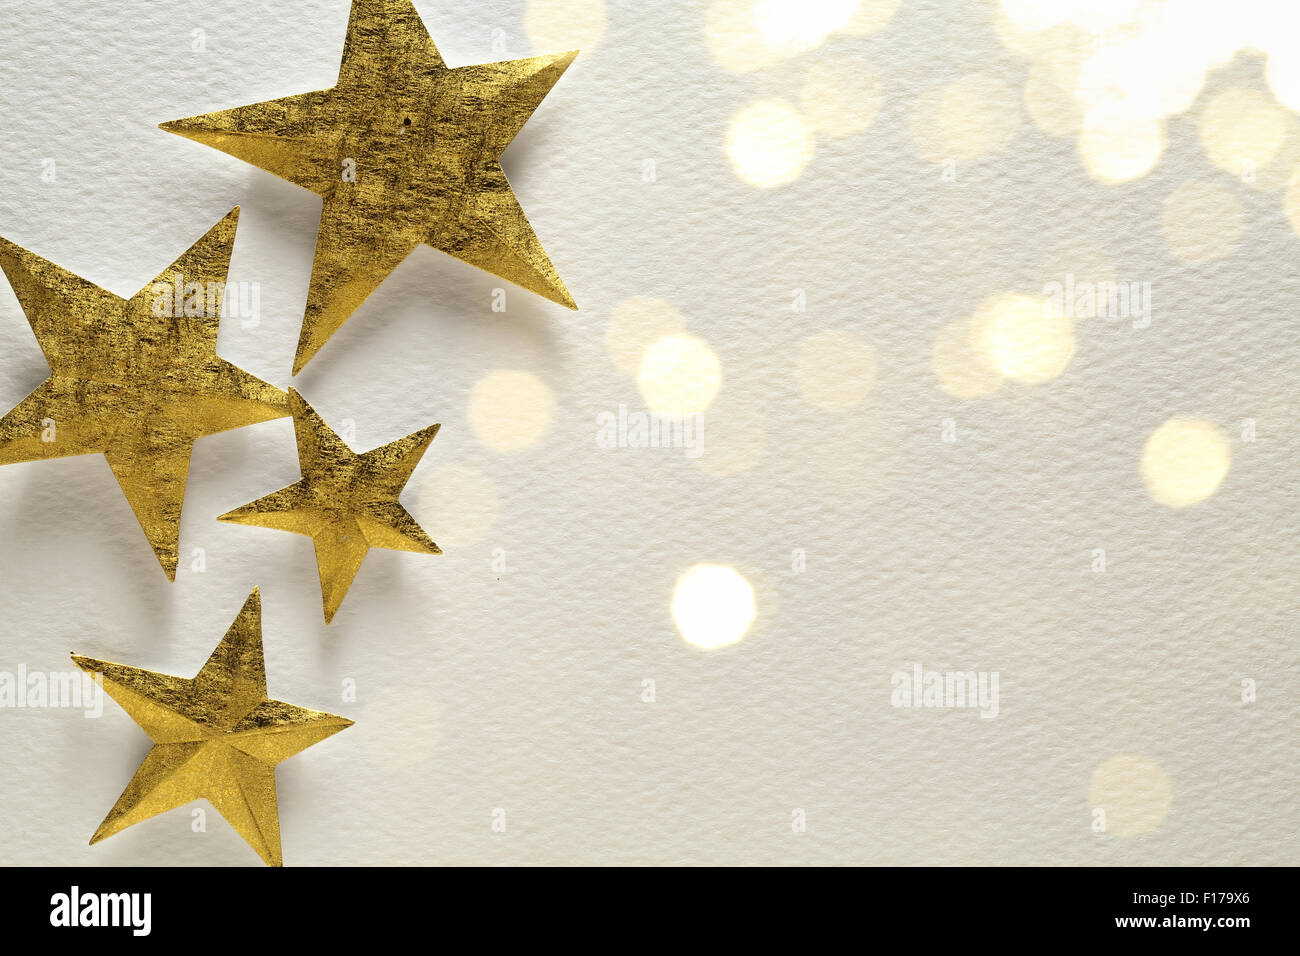 Golden star on festive background Stock Photo